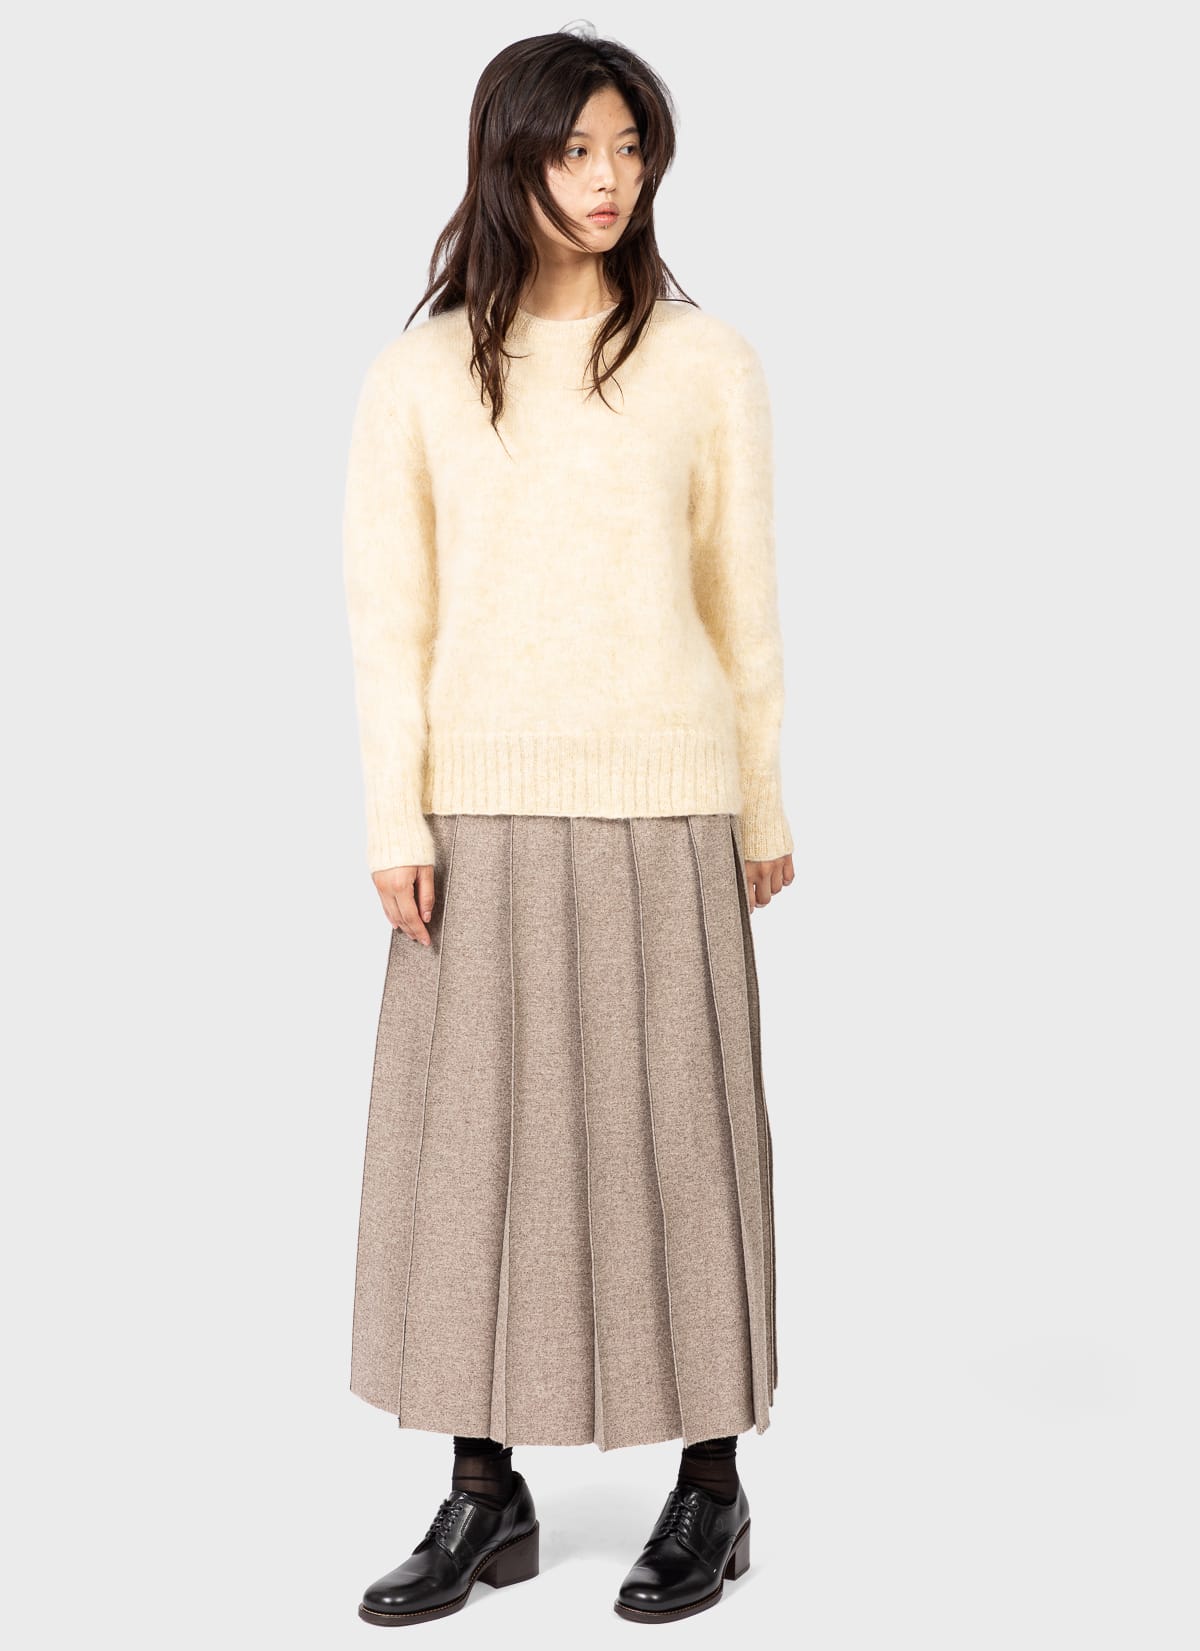 Ilana Blumberg Traditional Mohair Sweater